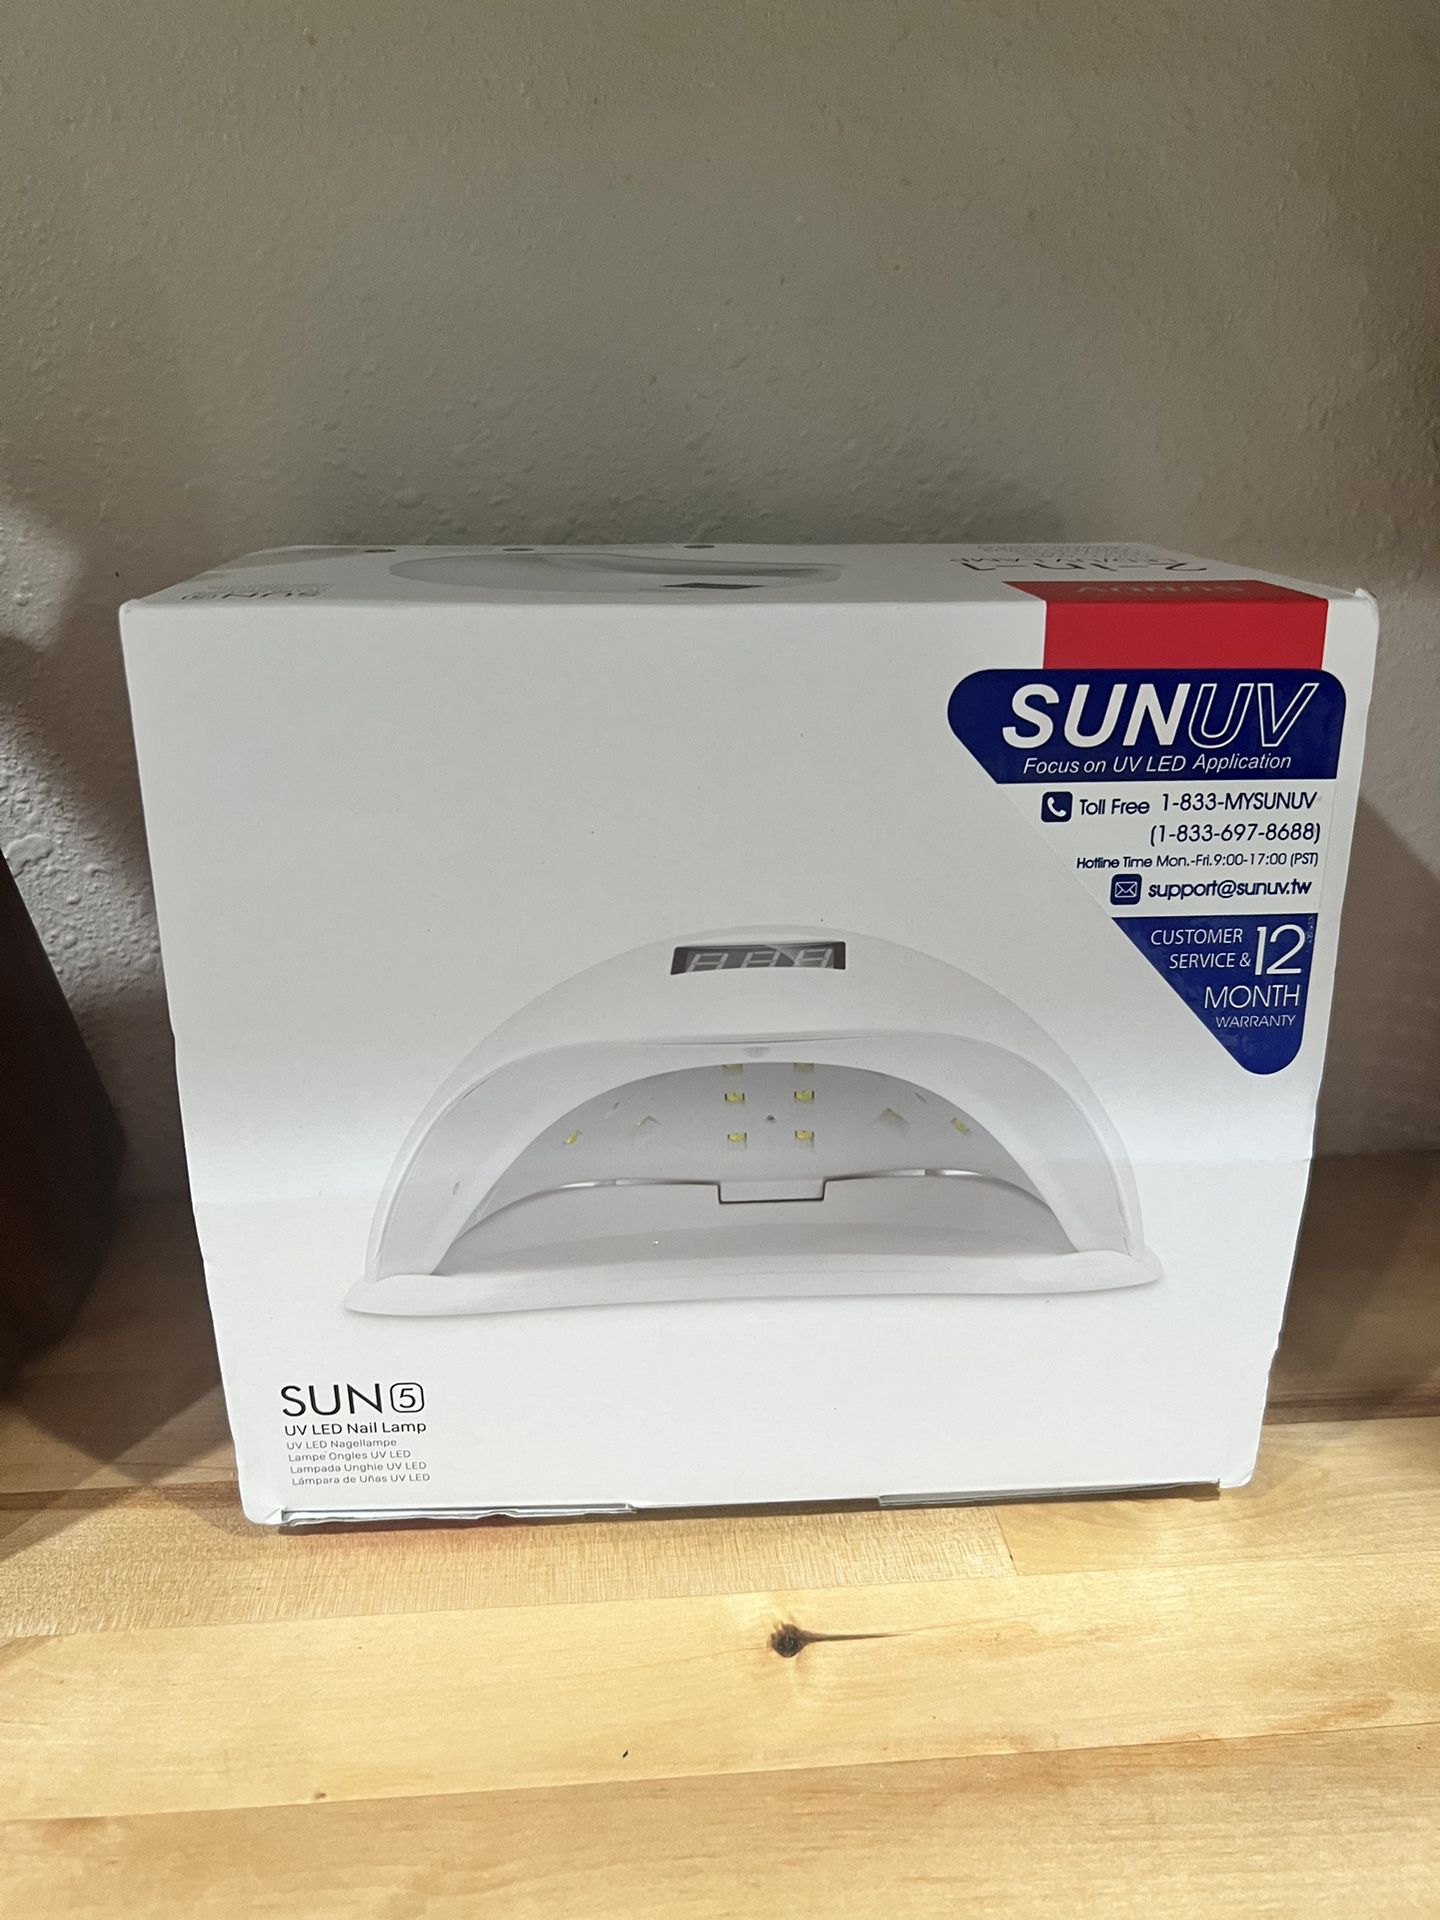 SunUv LED Nail Lamp/Dryer